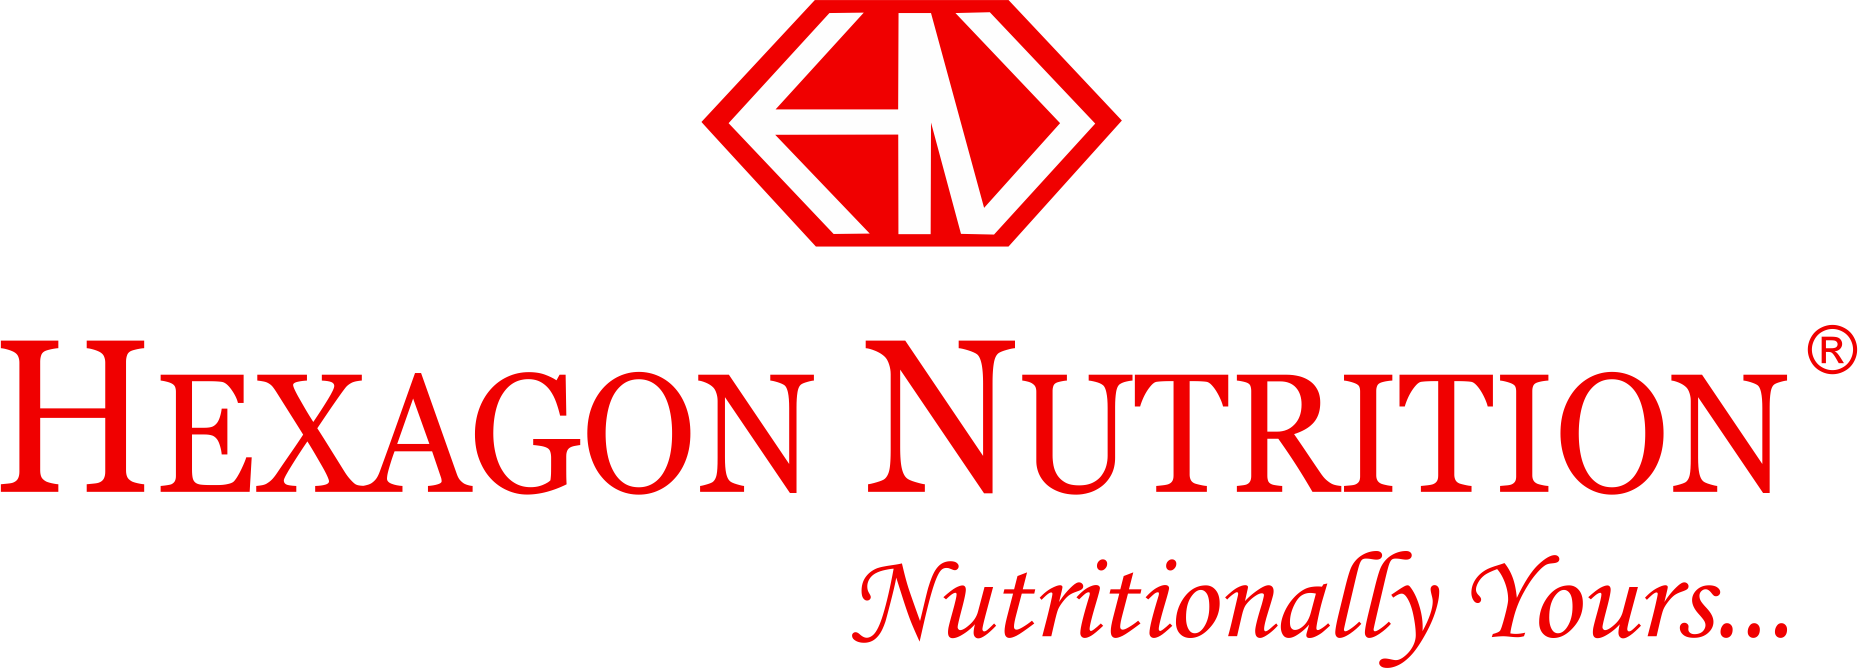 Hexagon Nutrition Ltd.